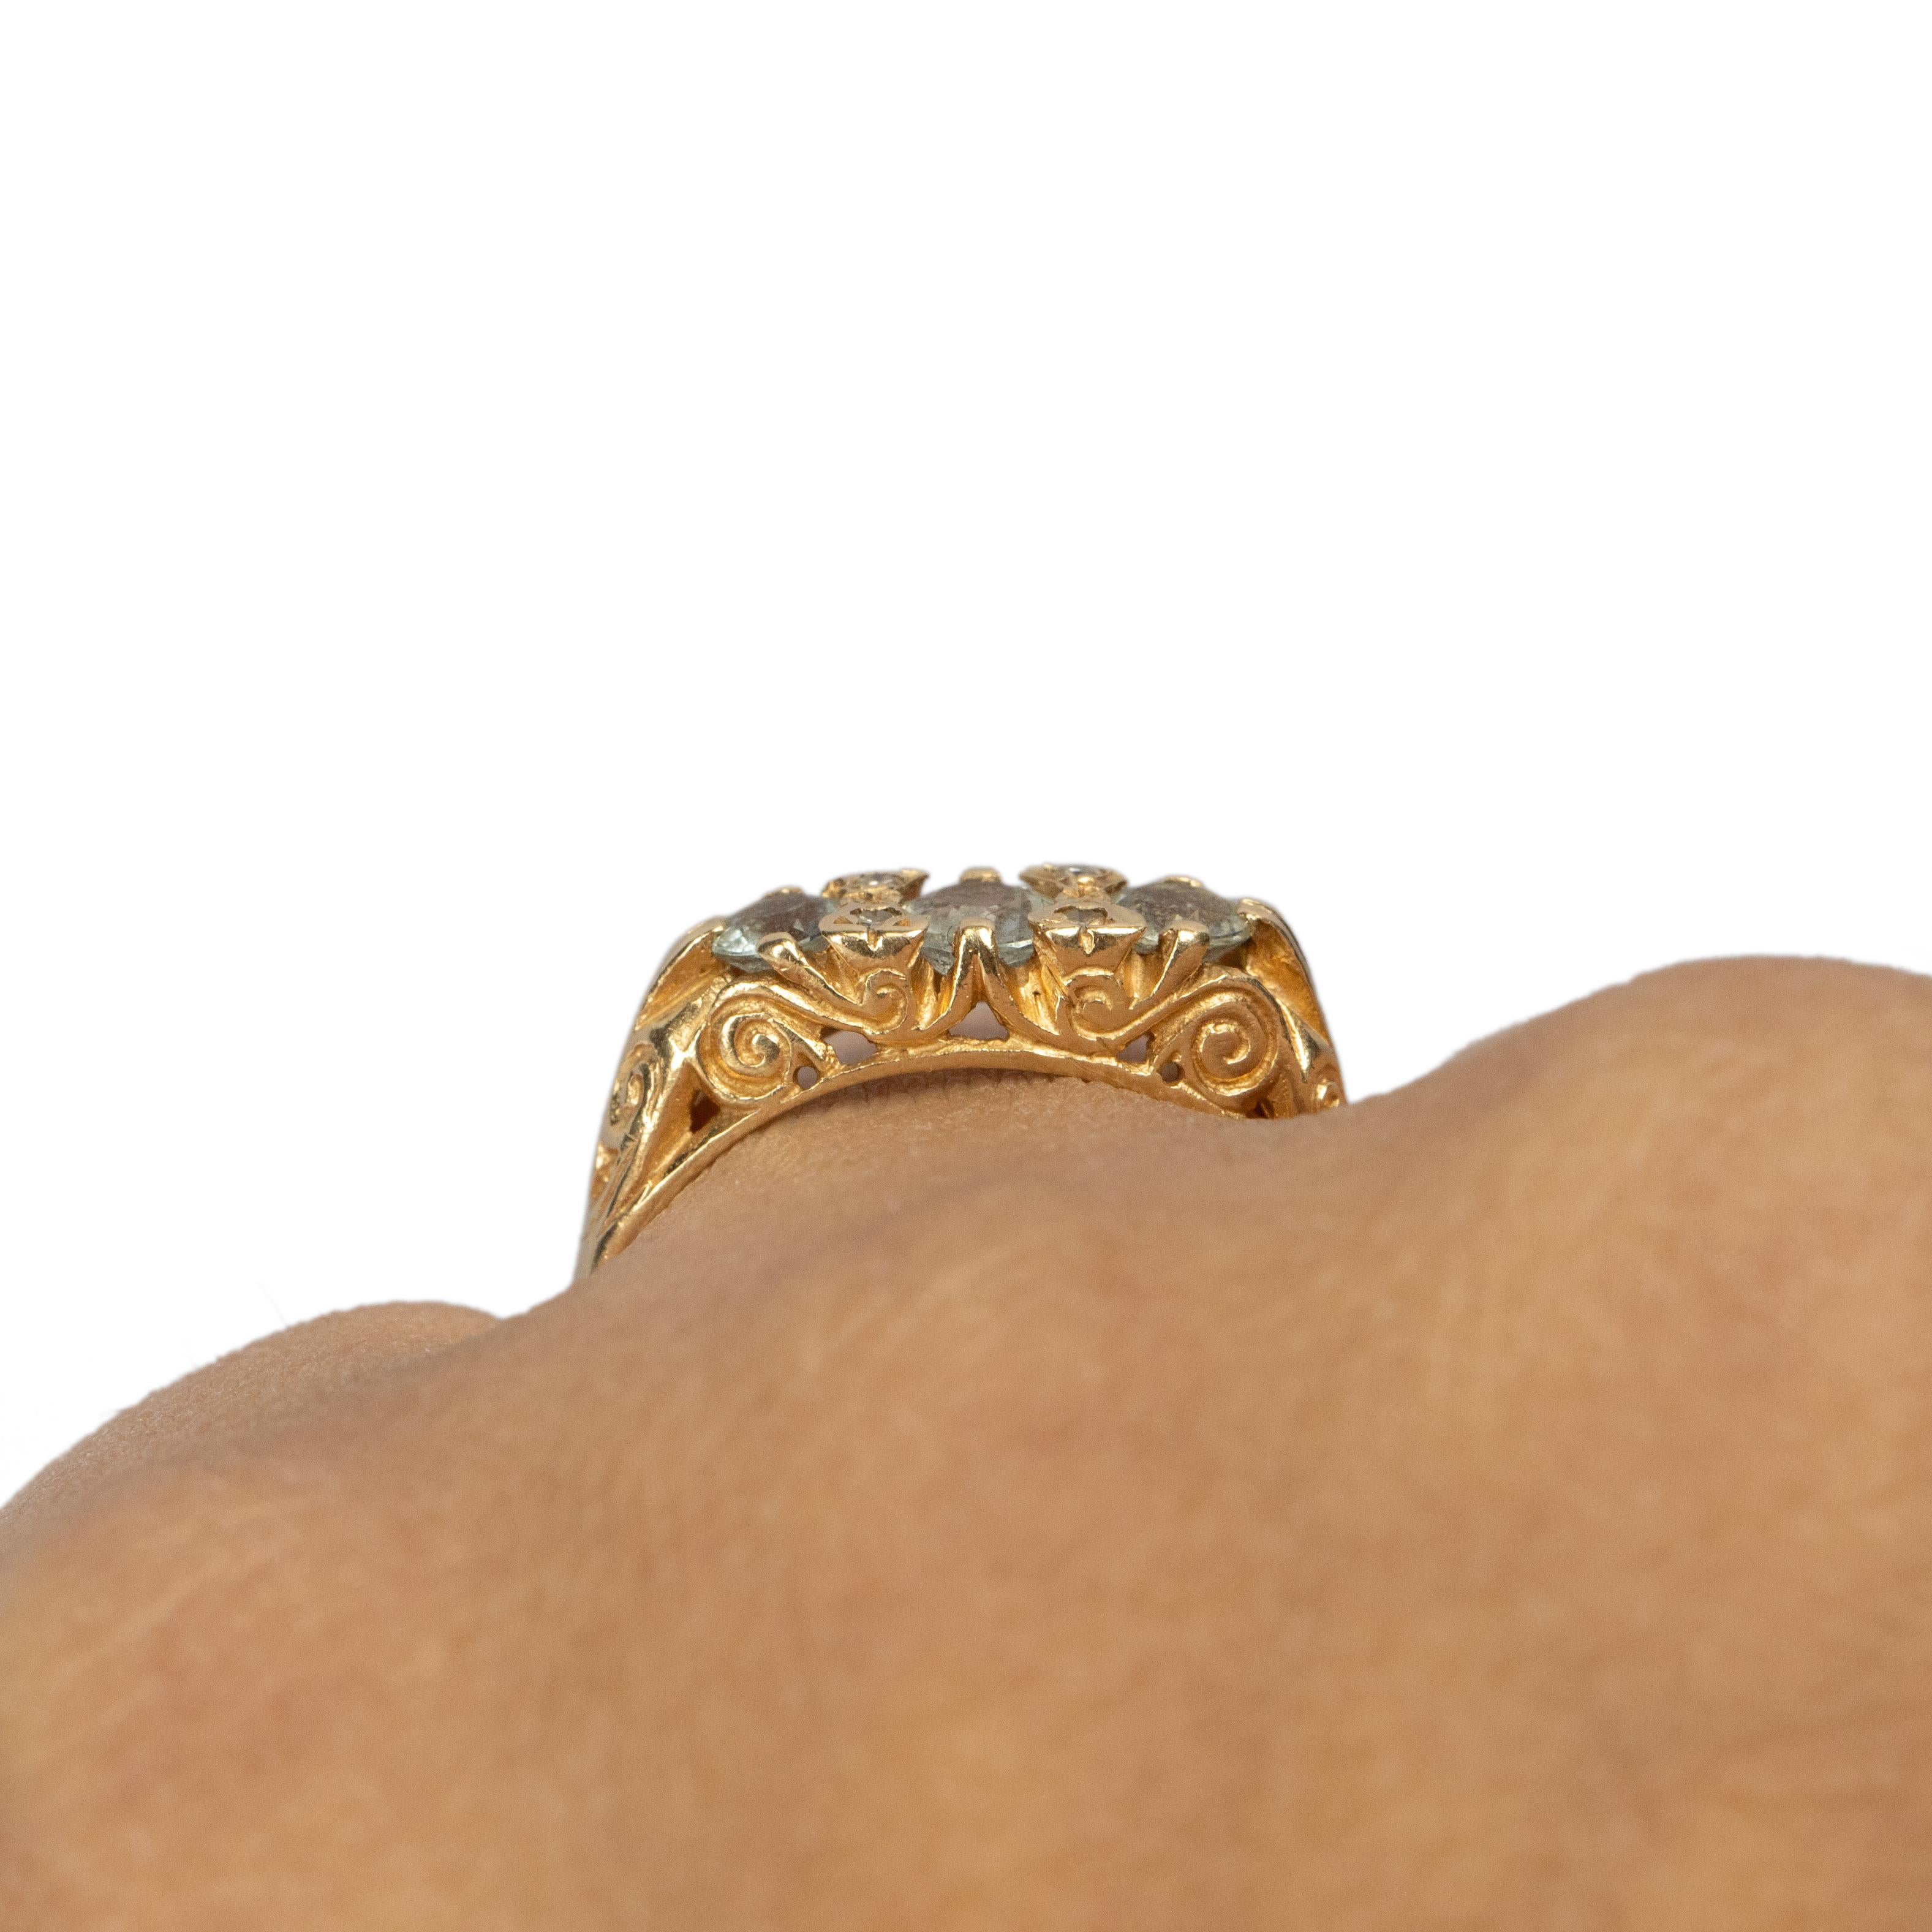 Vintage 14K Yellow Gold Three Stone Ring with Aquamarine Gems and Filigree Eng. 2